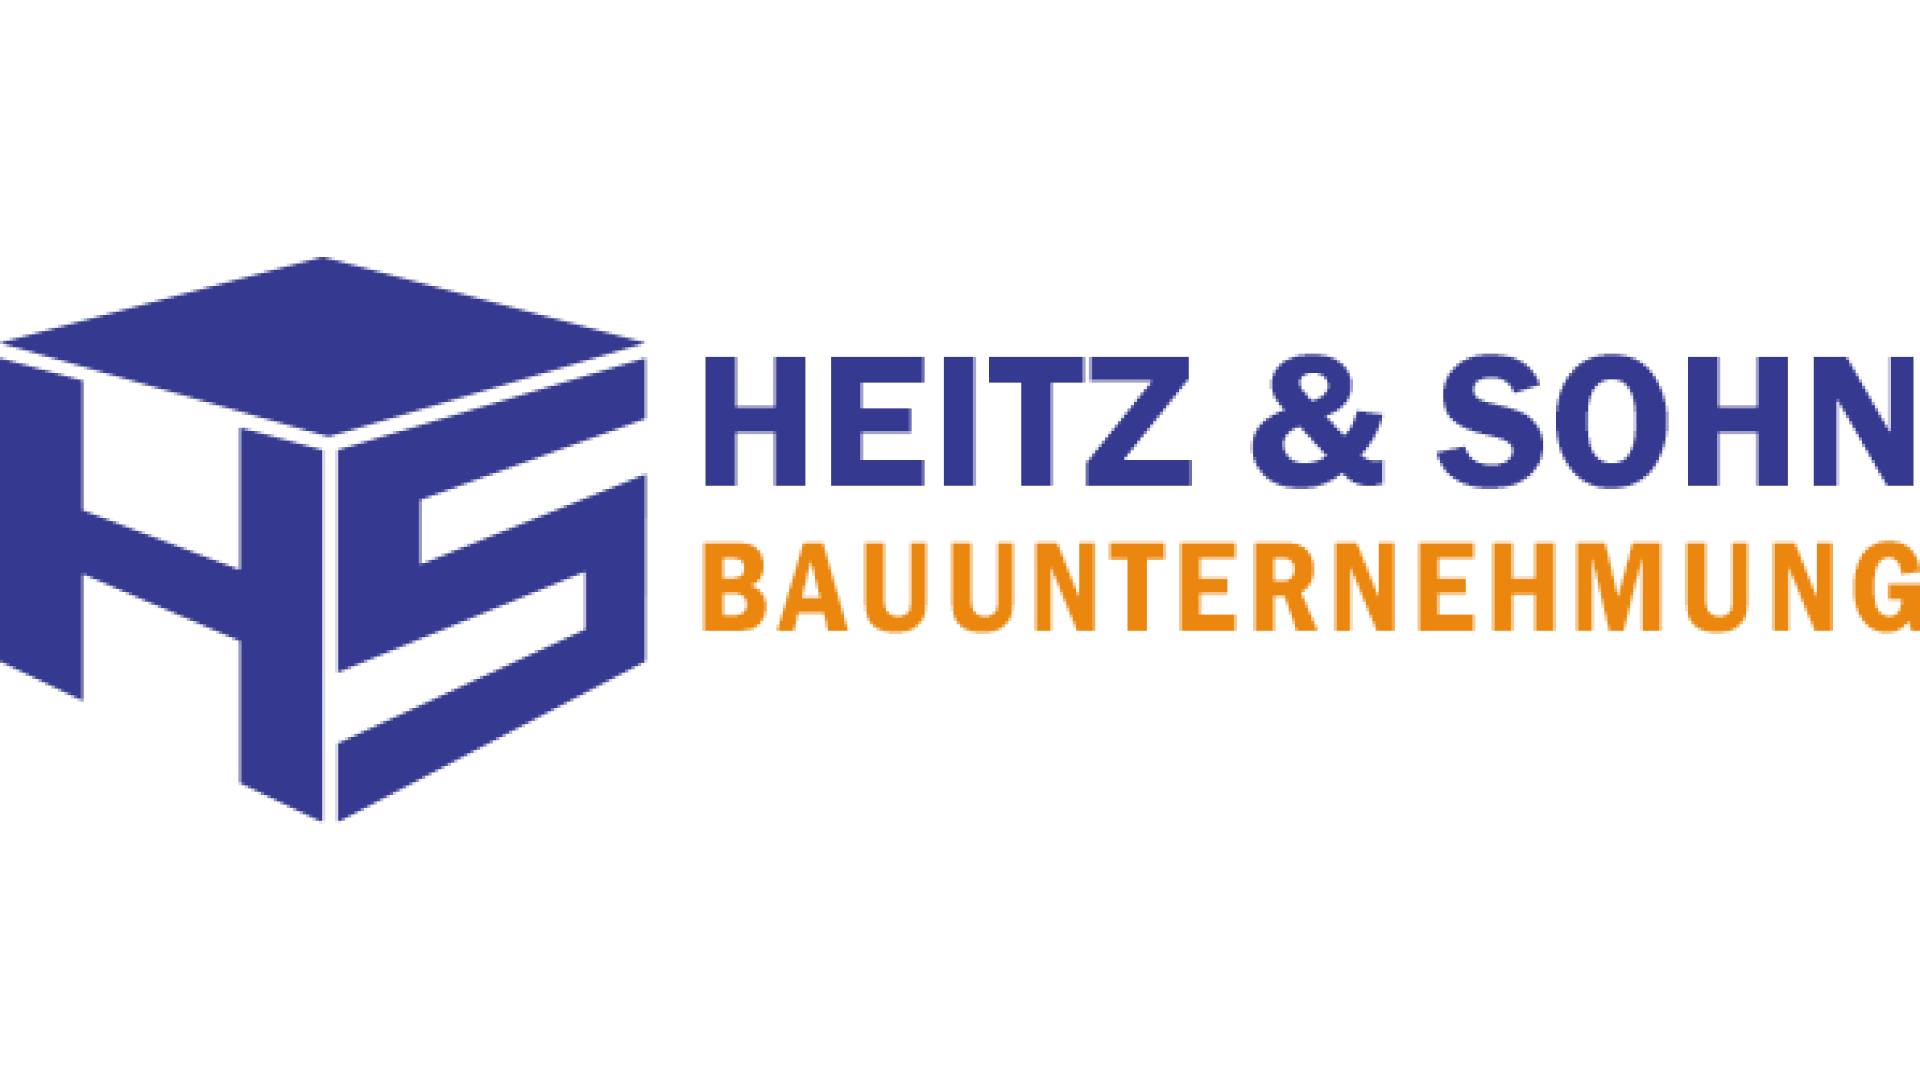 Heitz & Sohn Bauunternehmung